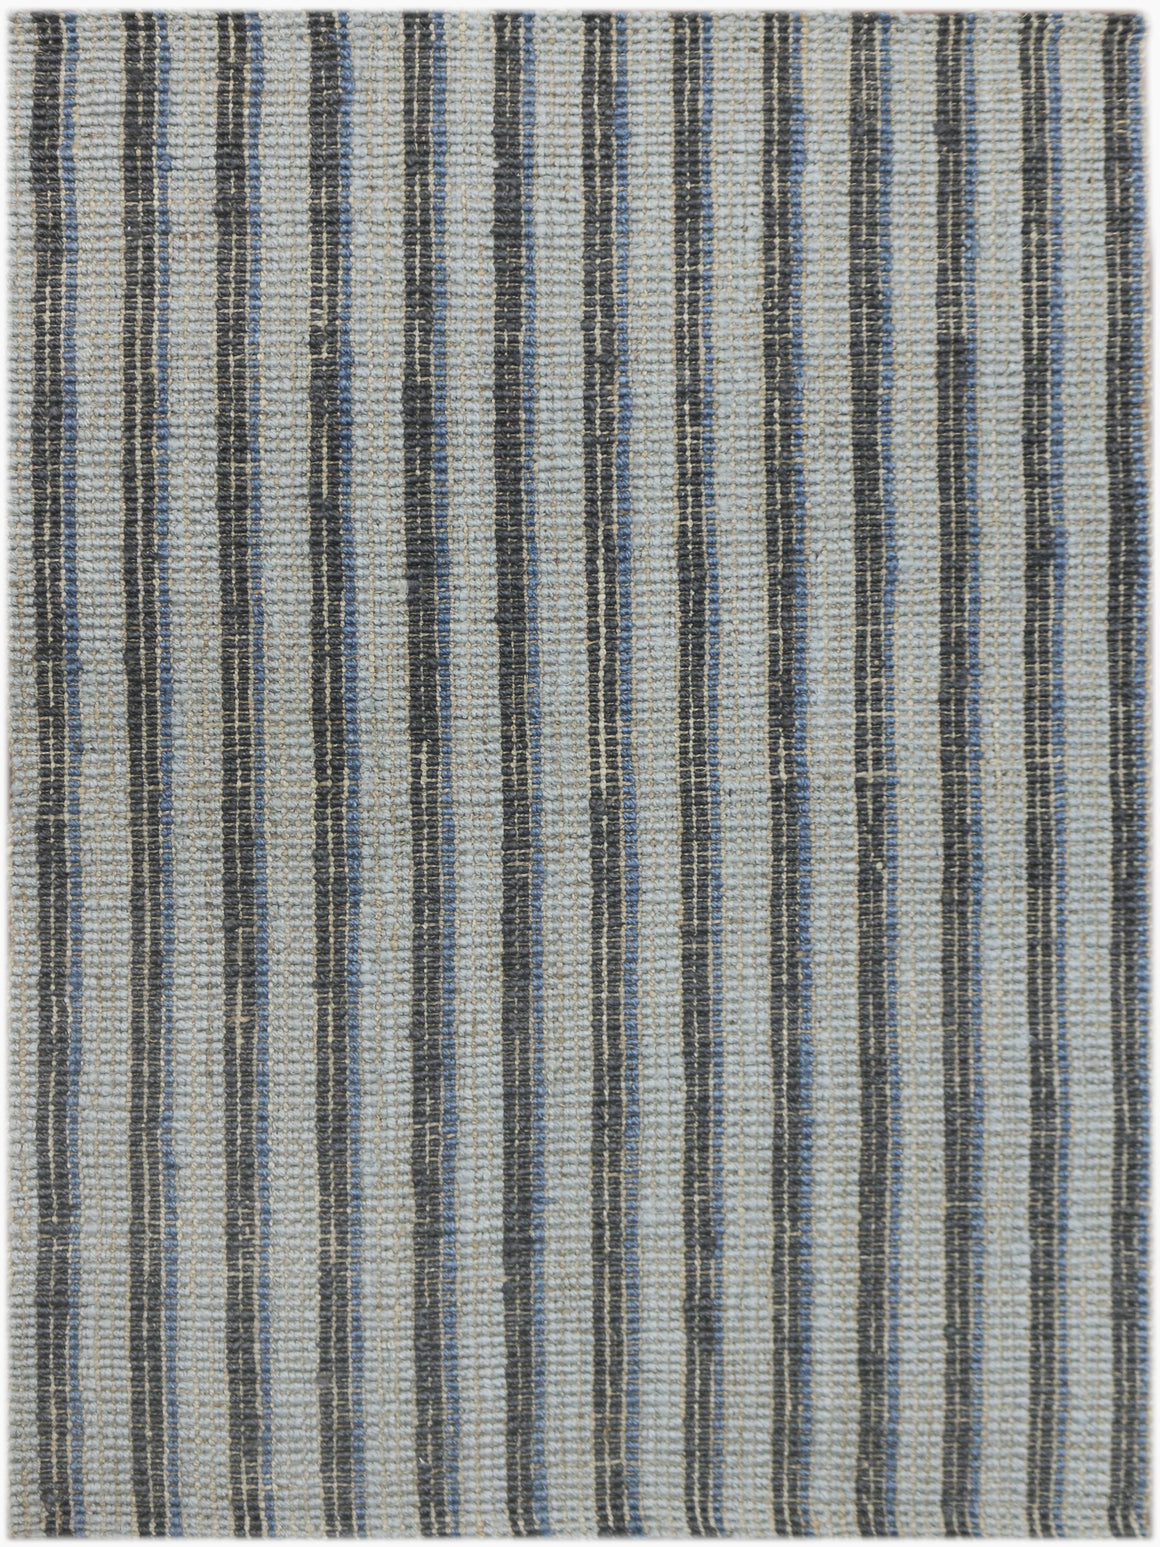 Tropics Striped Blue Hand-Woven Rug 5'x8'